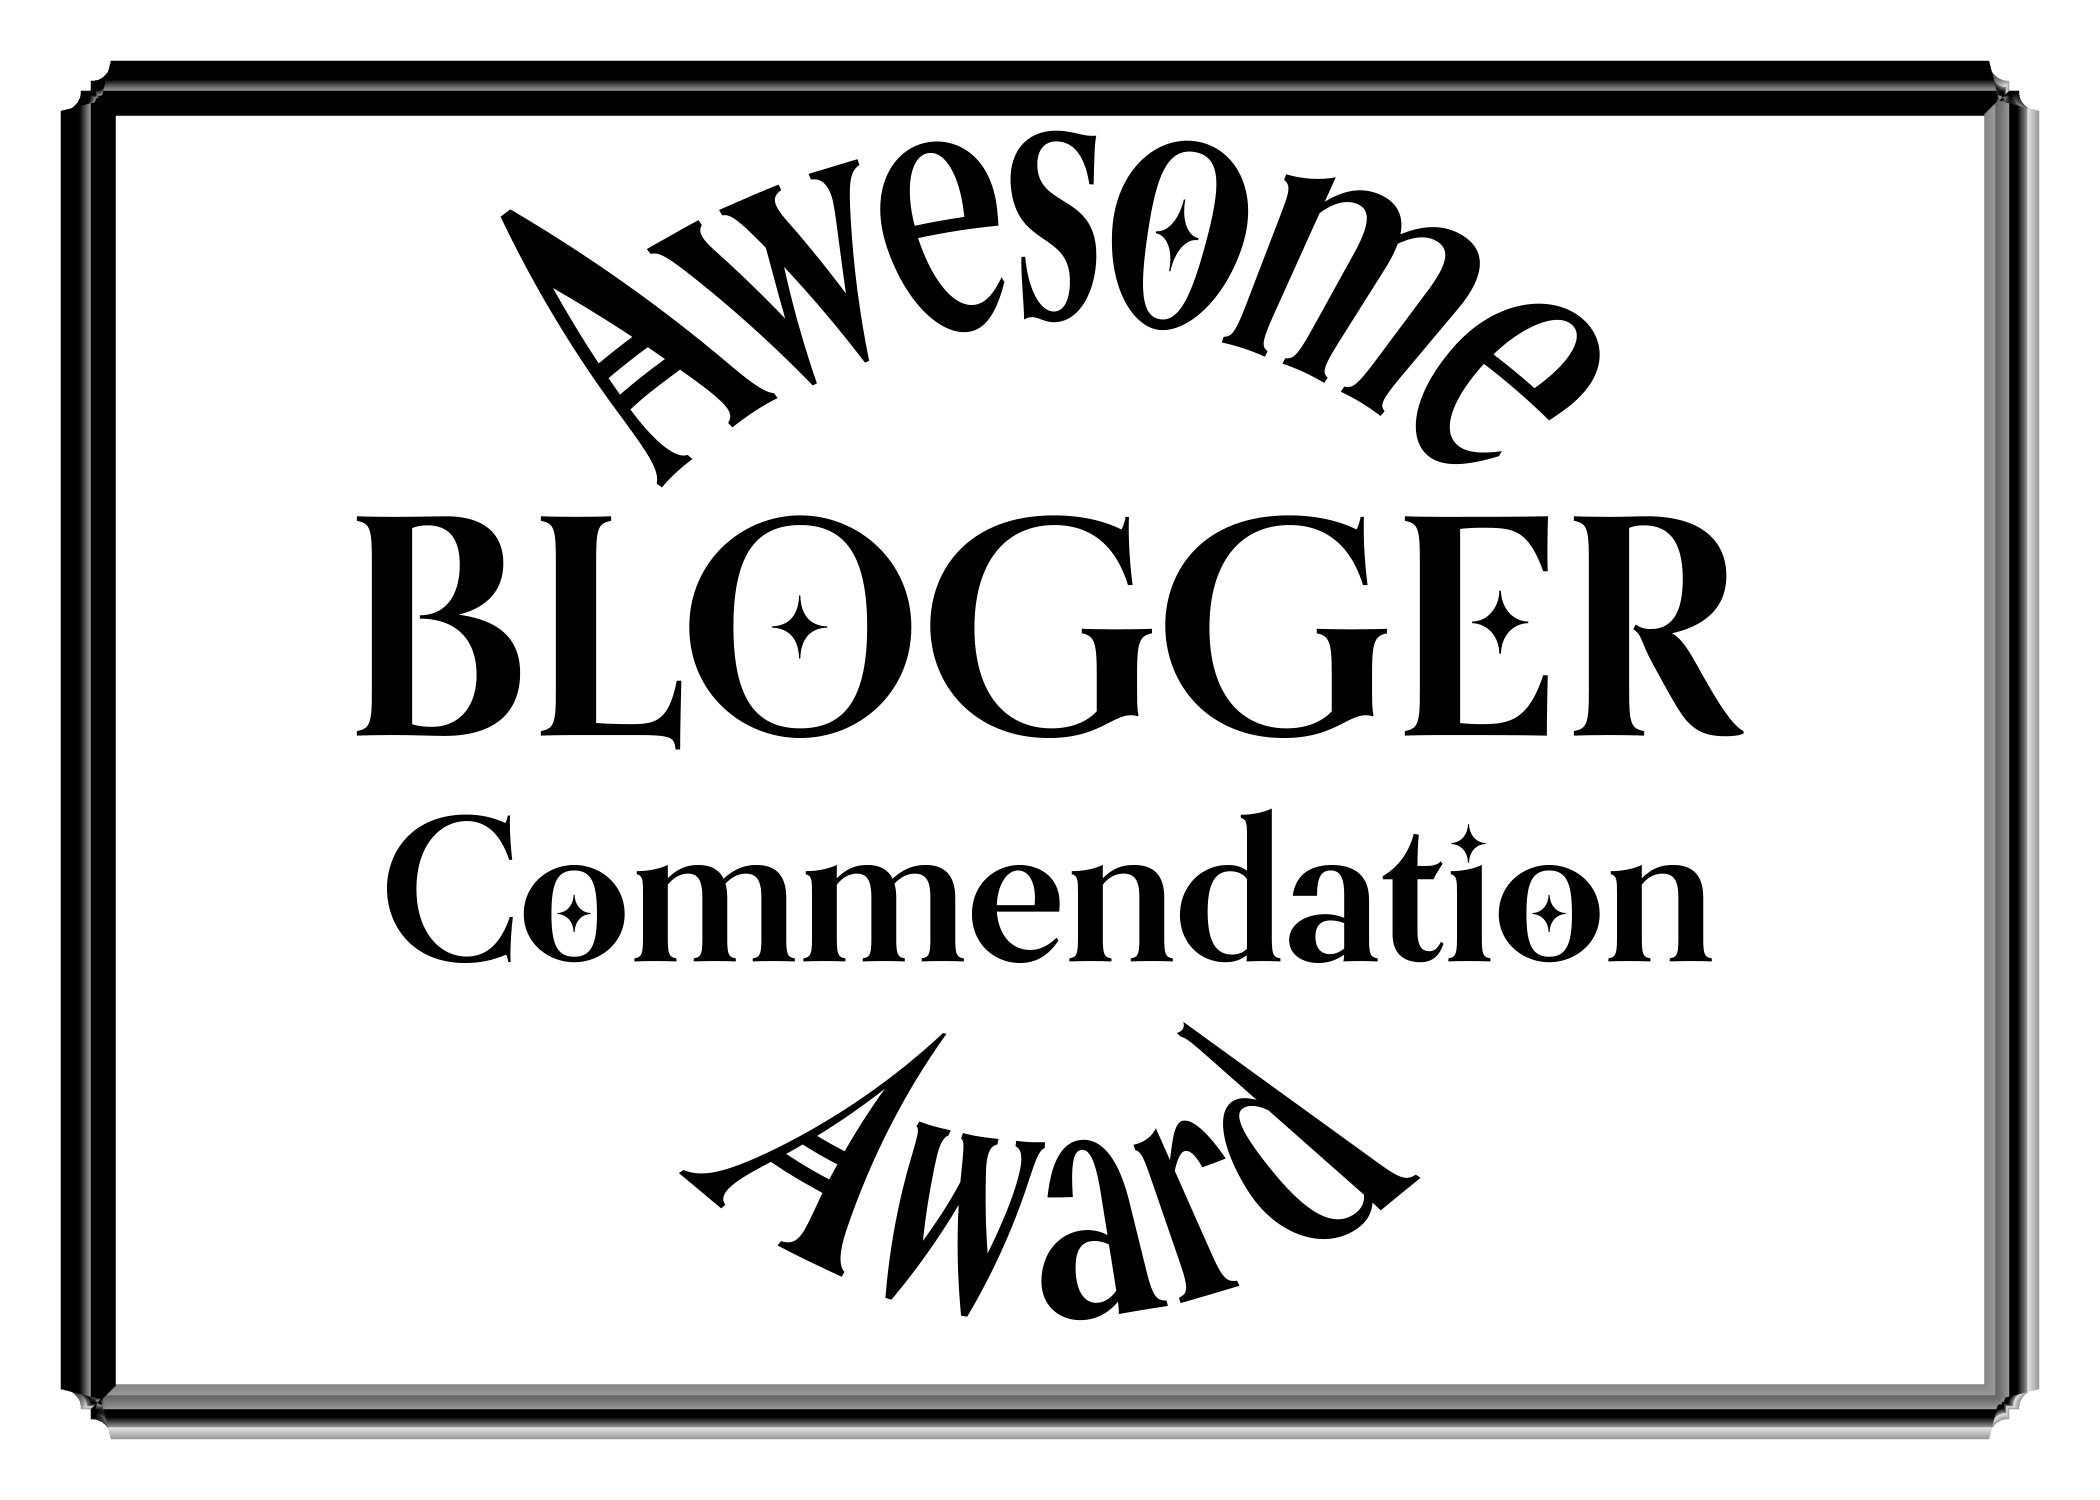 Awesome Blogger Commendation Award Image